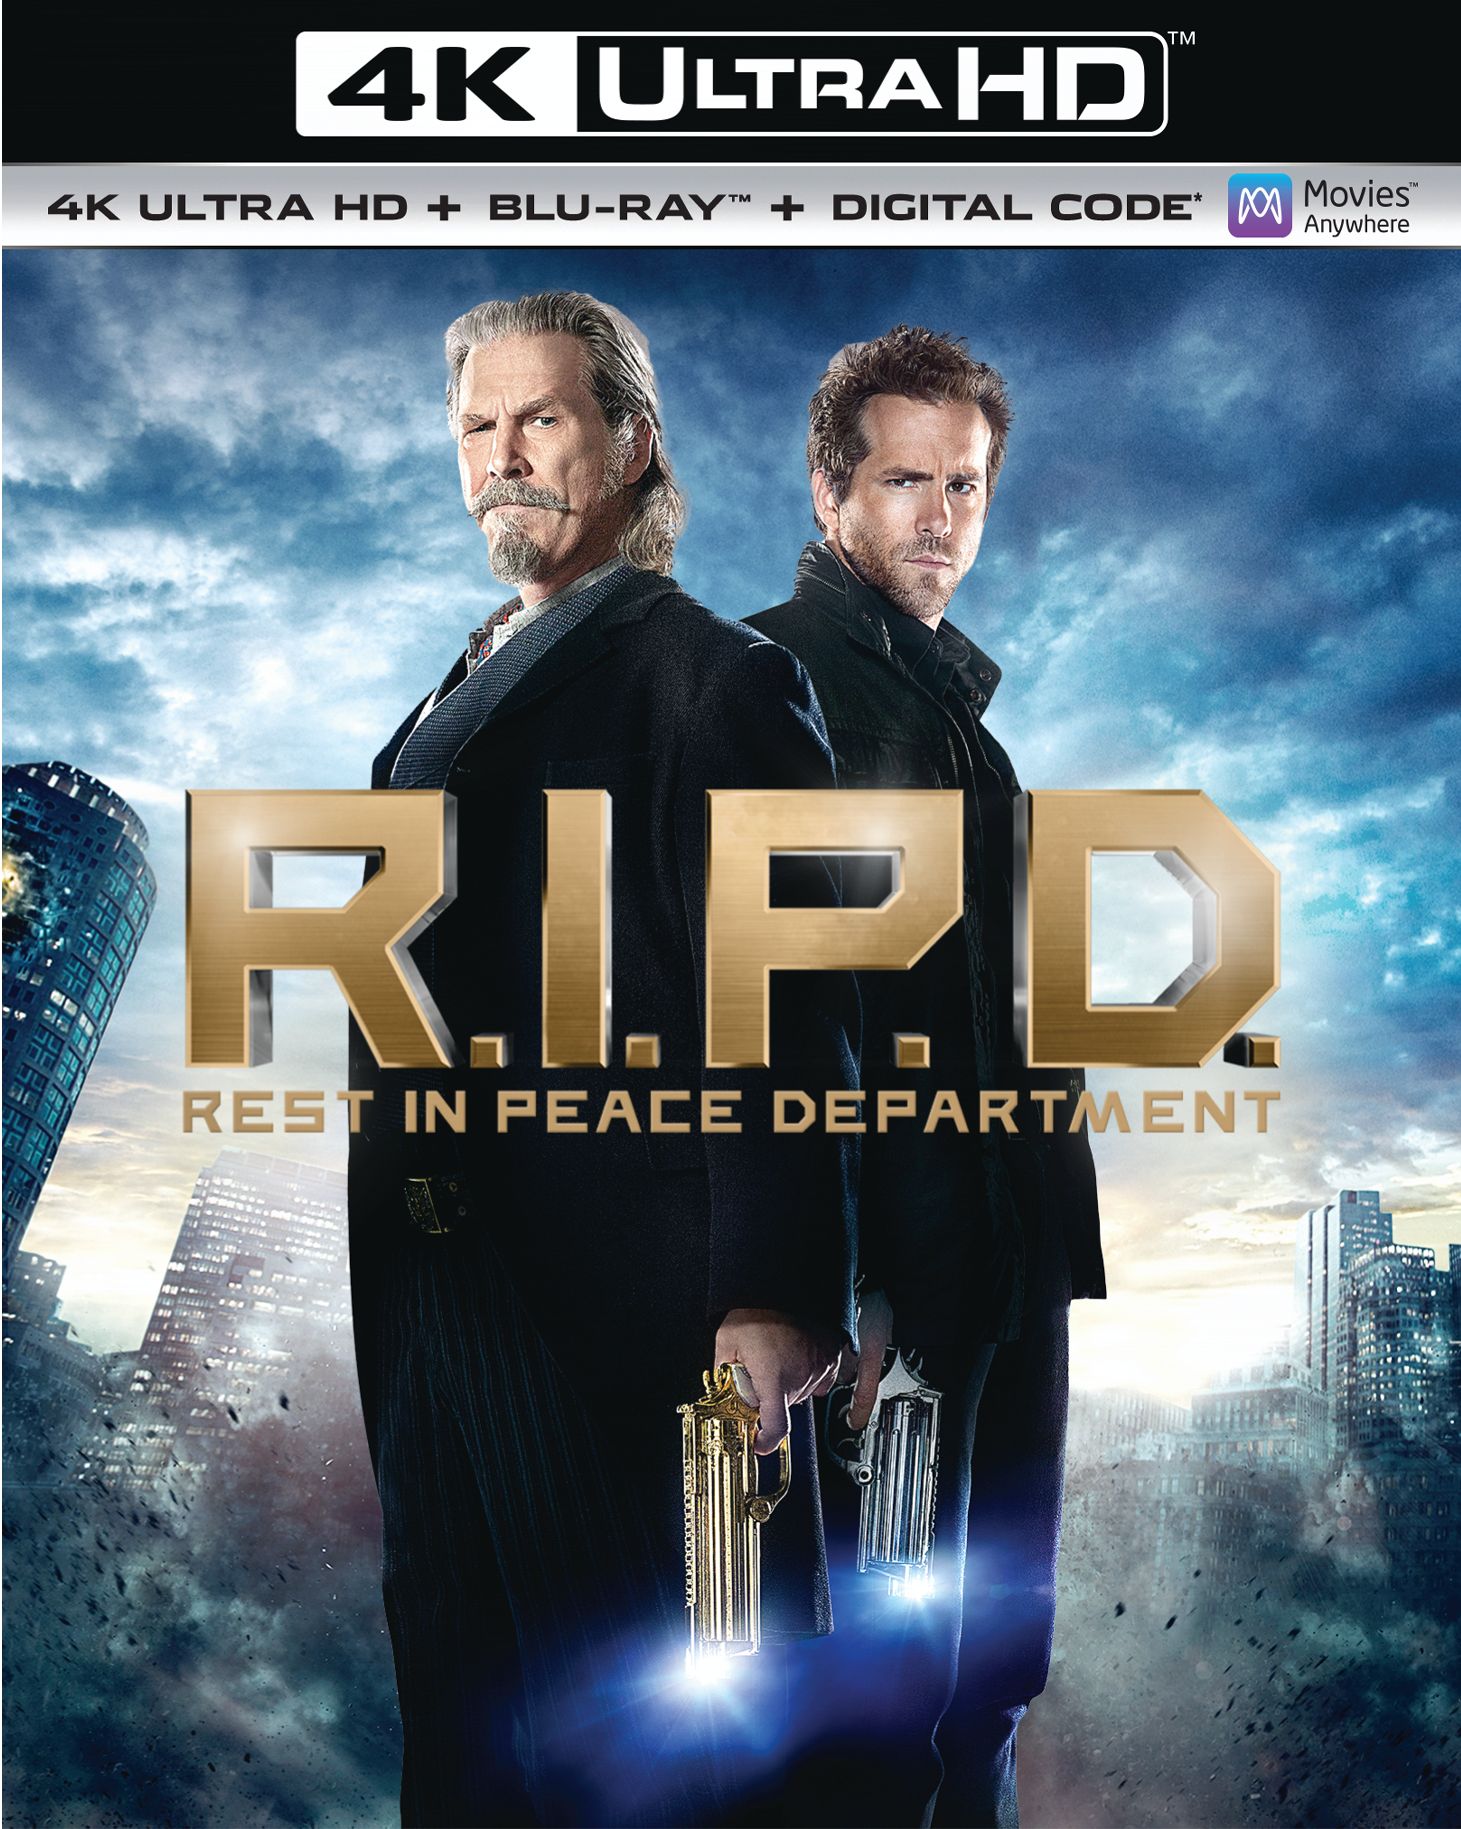 R.I.P.D. (4K Ultra HD + Blu-ray) - UHD [ 2013 ]  - Action Movies On 4K Ultra HD Blu-ray - Movies On GRUV